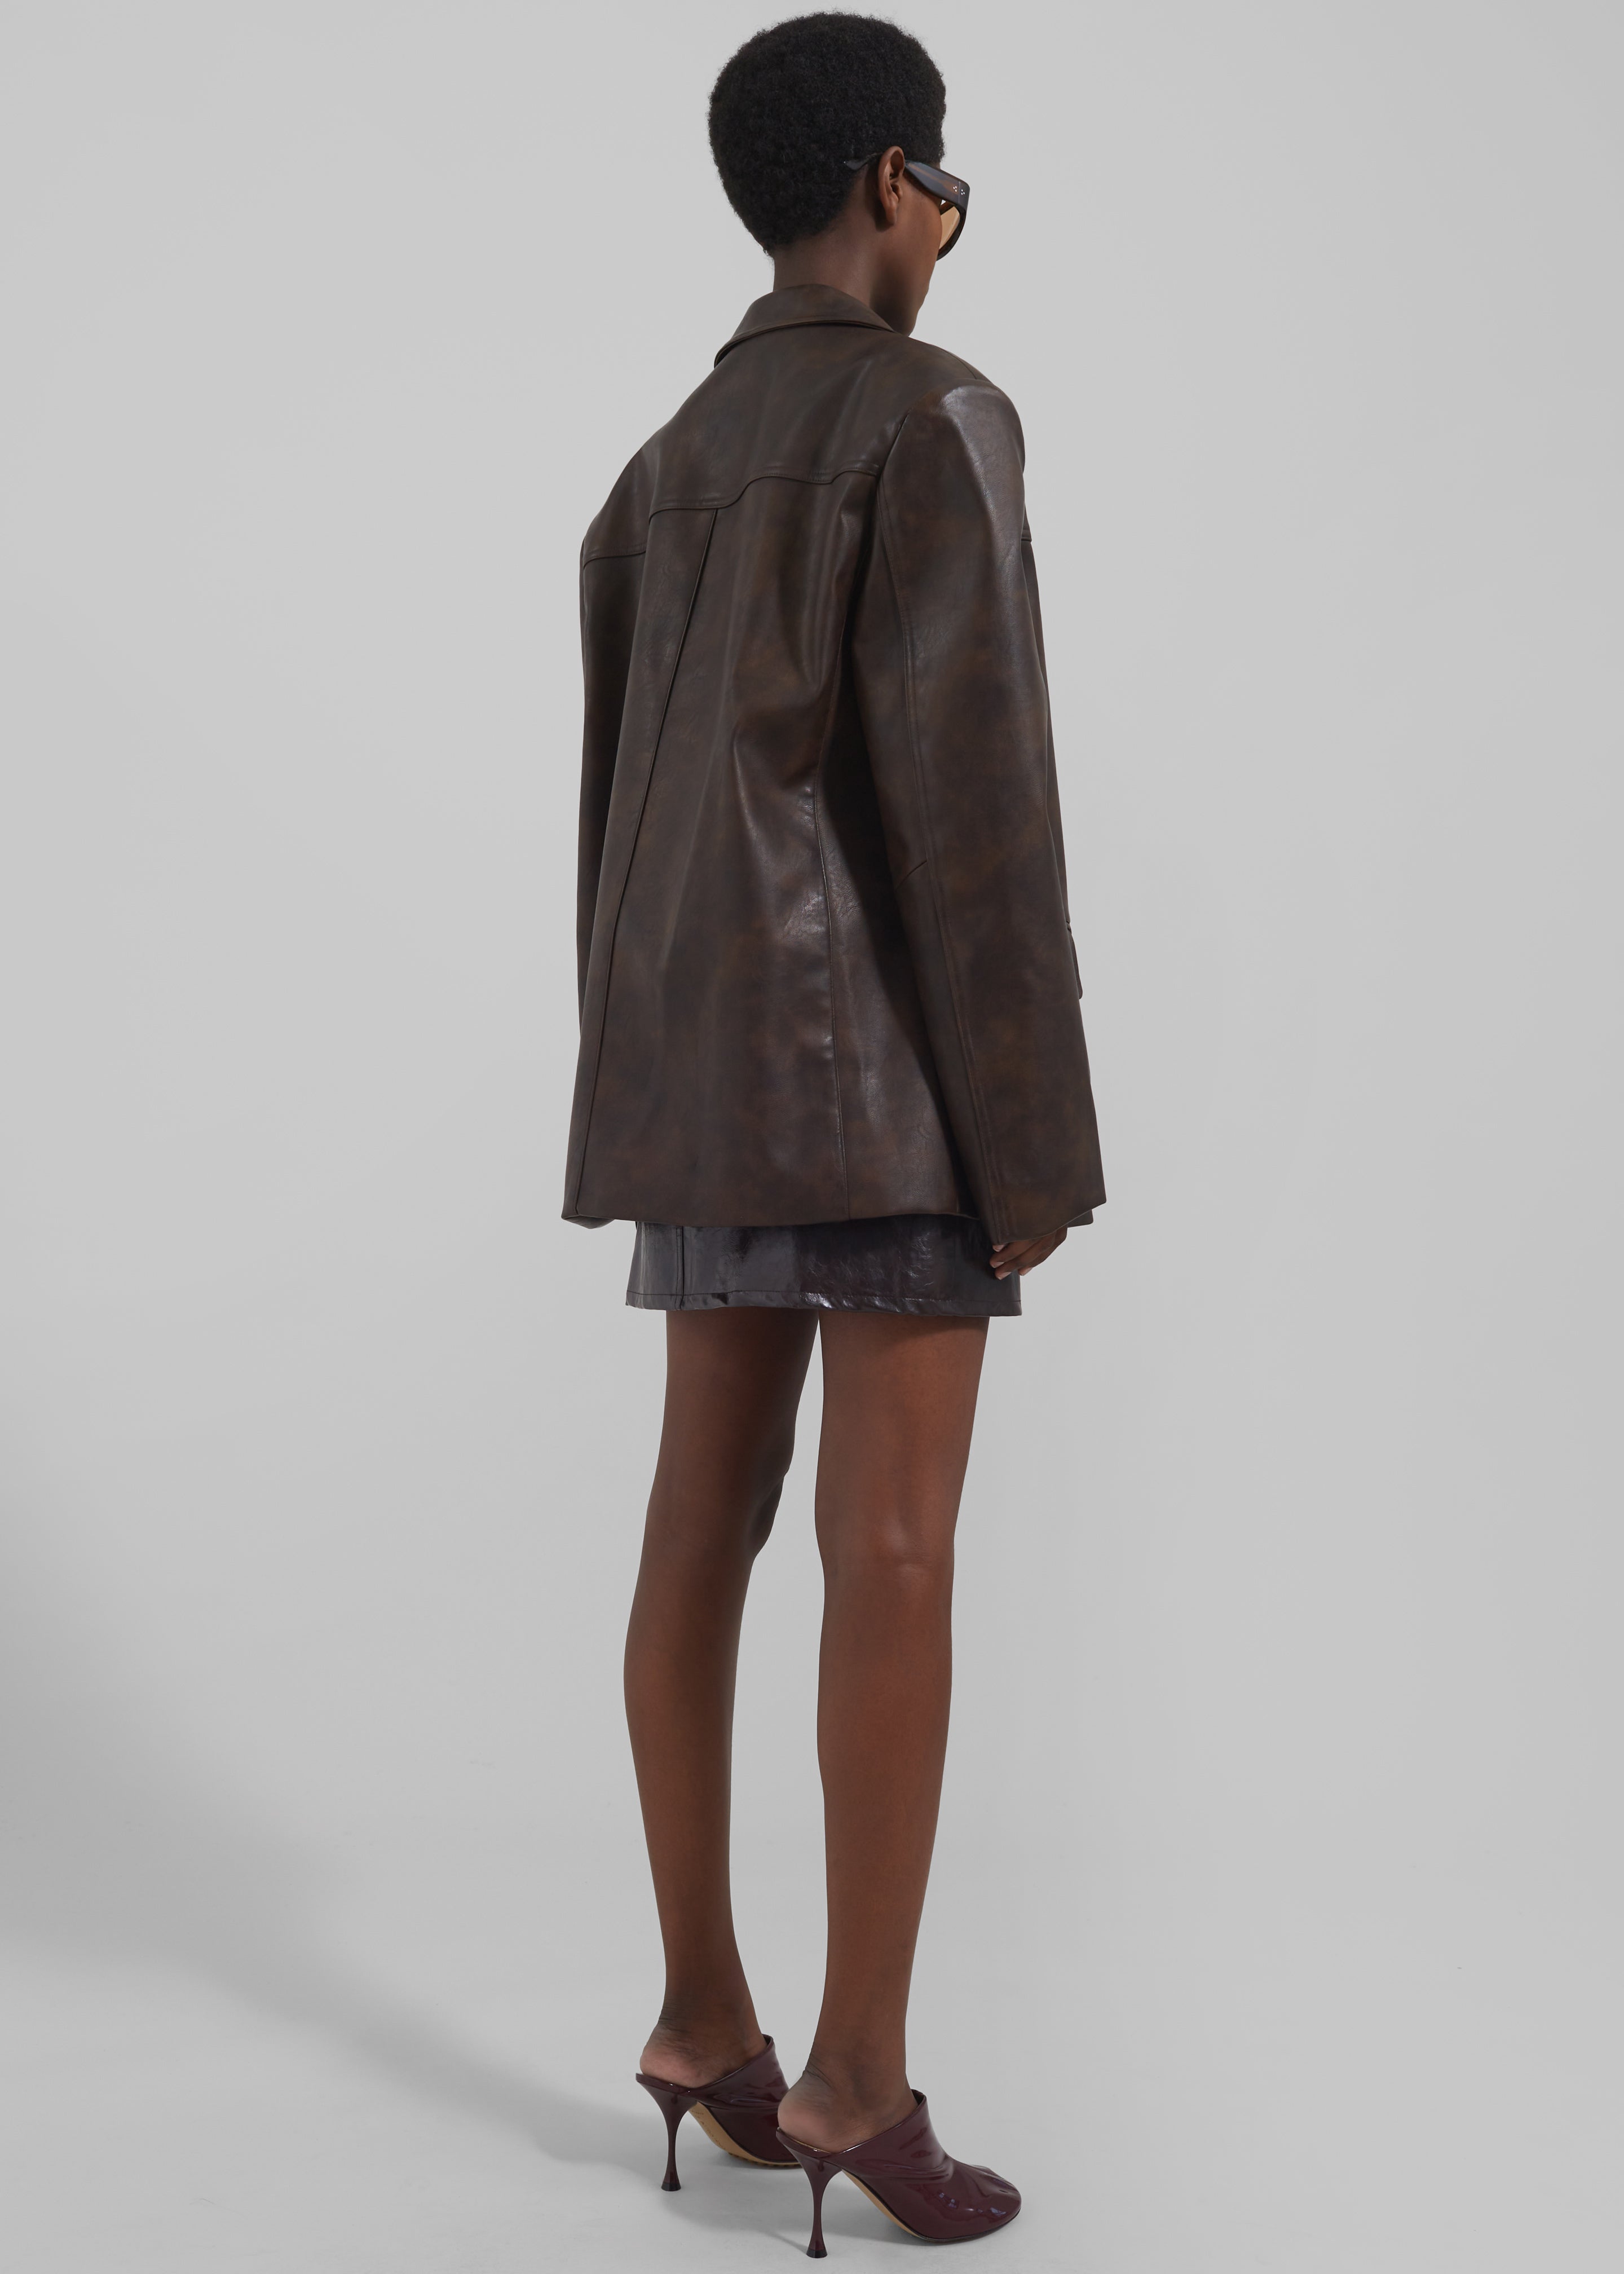 Alessandra Faux Leather Blazer - Brown - 9